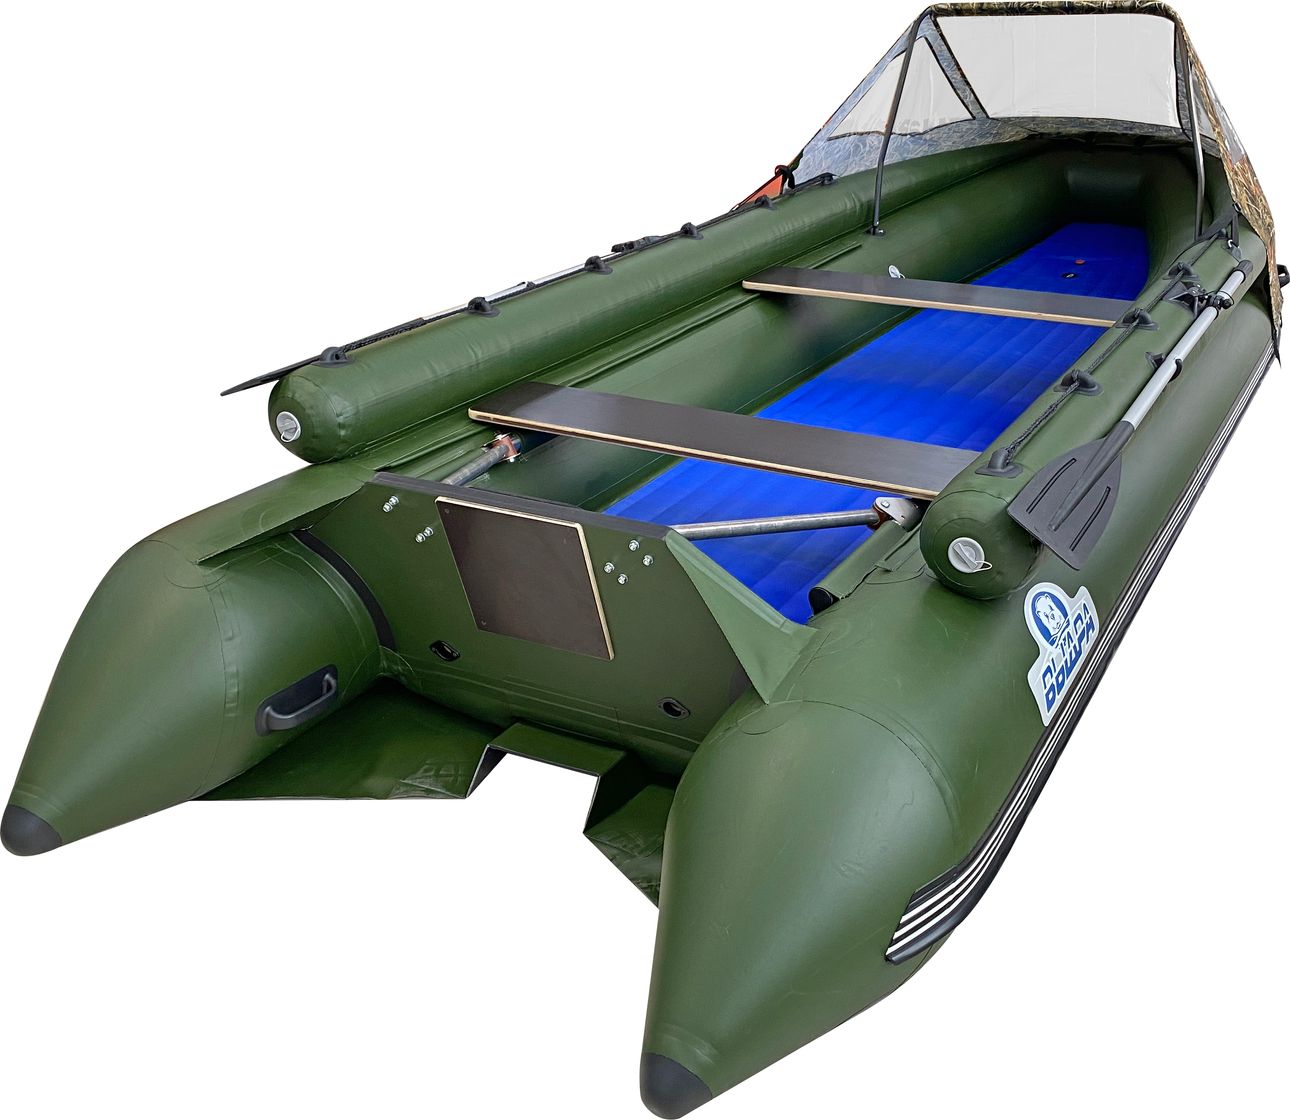 Надувная лодка ПВХ, Выдра 500 Чульман, усиление транца, фальшборт, тент, зеленый VDR500CHGR-YTNTF